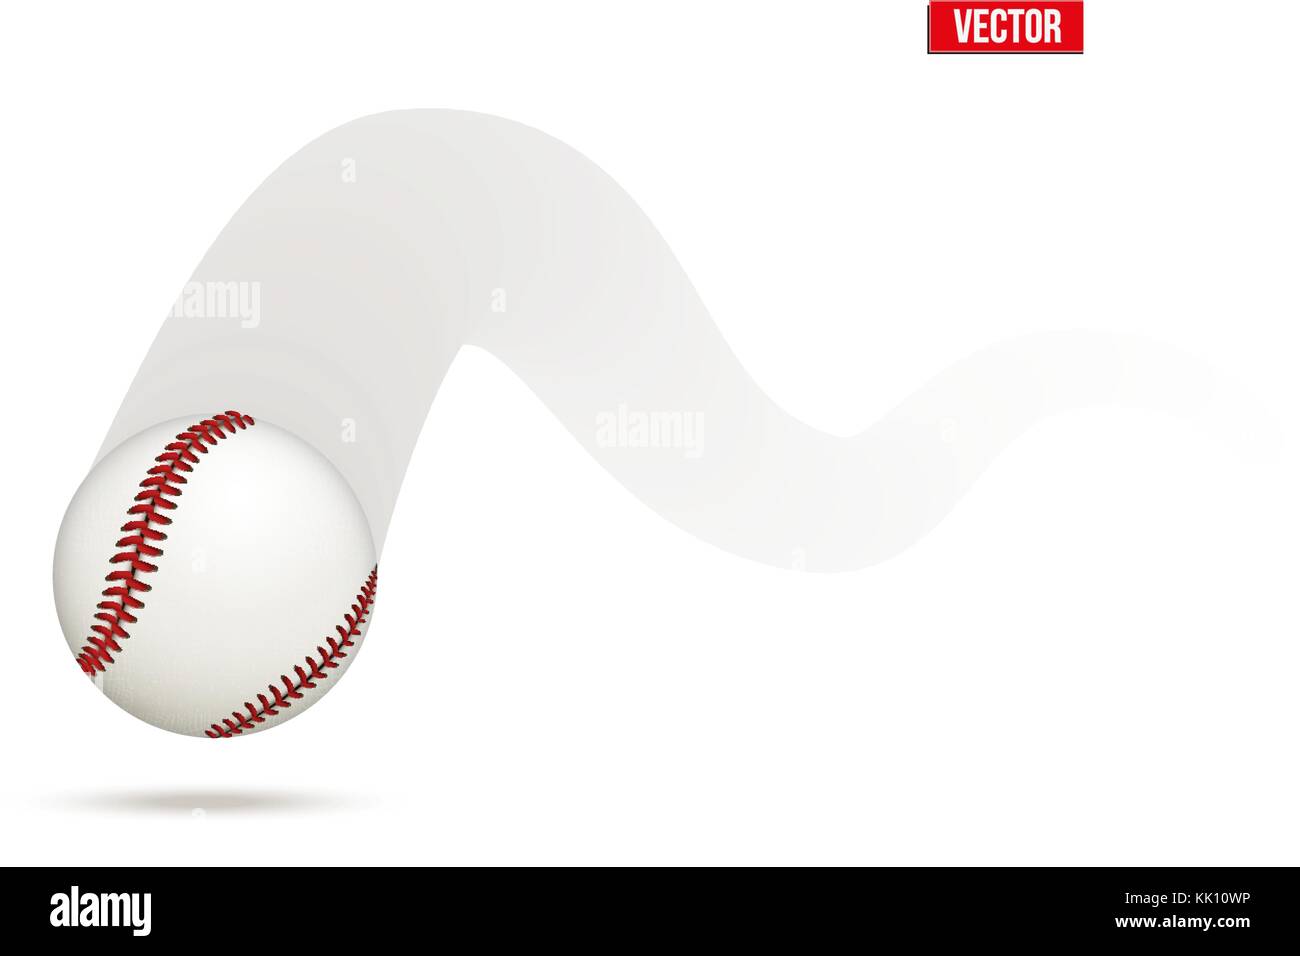 Vector illustration of baseball leather ball Stock Vector